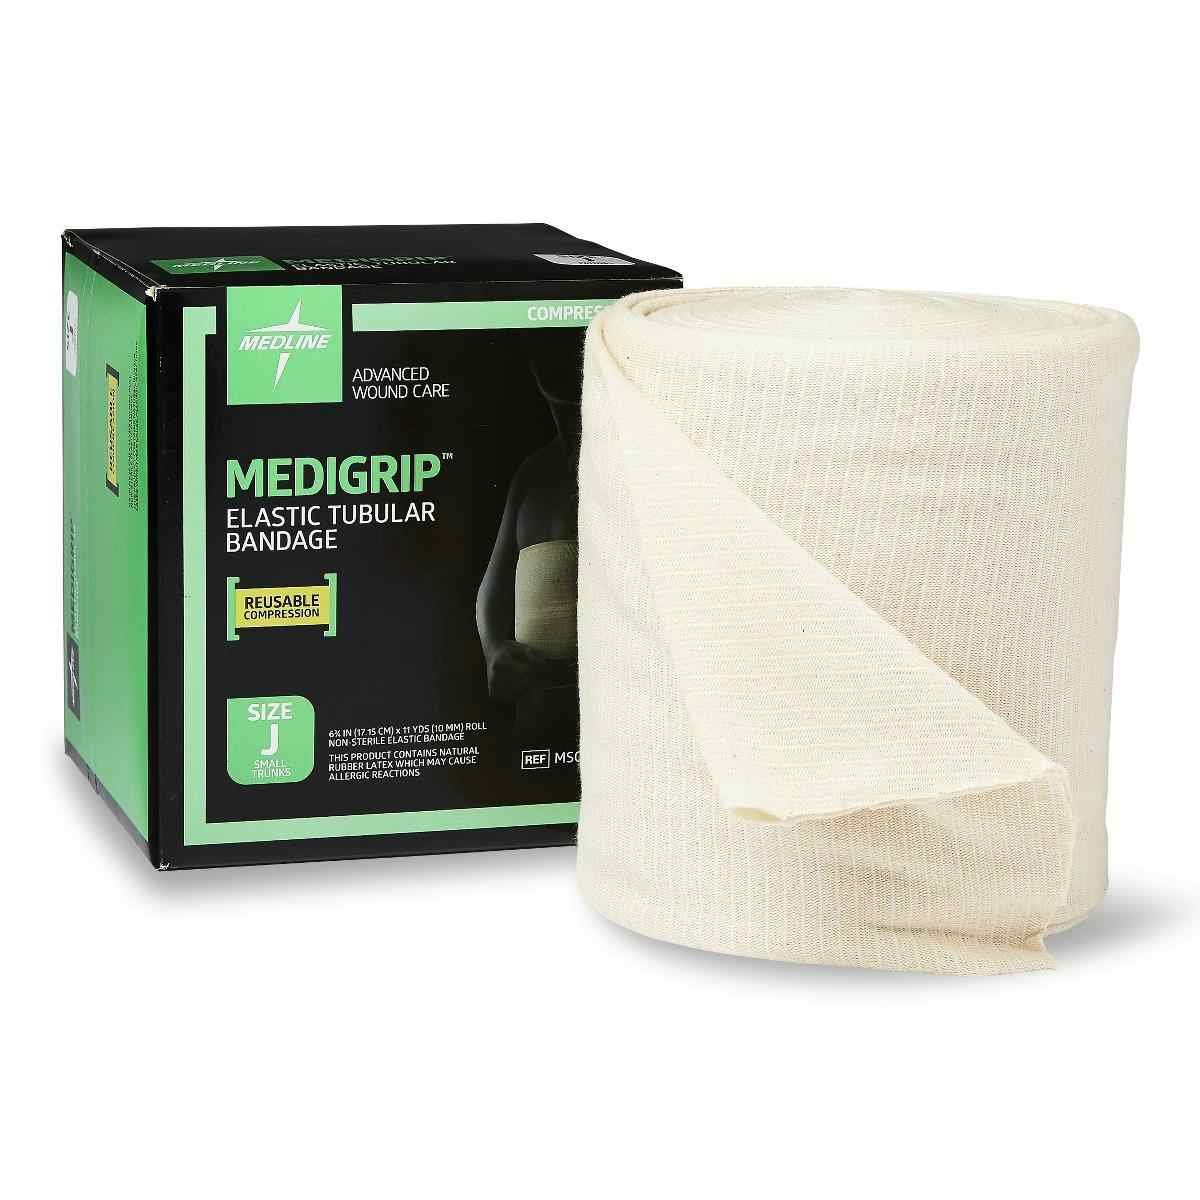 Medigrip Elastic Latex Tubular Support Bandage, Size J, MSC9507, 6-3/4"W (17.15 cm) - 1 Roll 